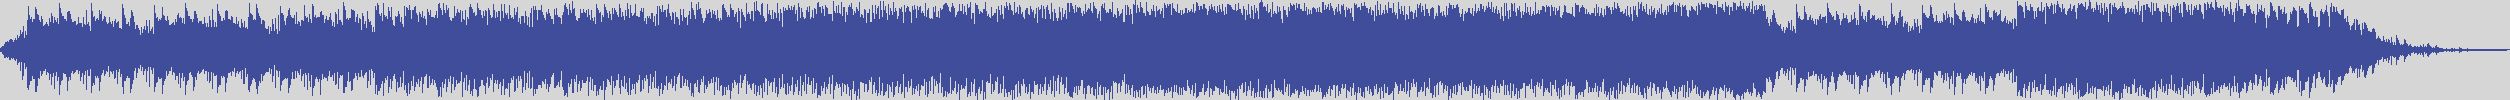 noclouds_chillout [NOC114] R. Stecca - Morombe [Original Mix] audio wave form